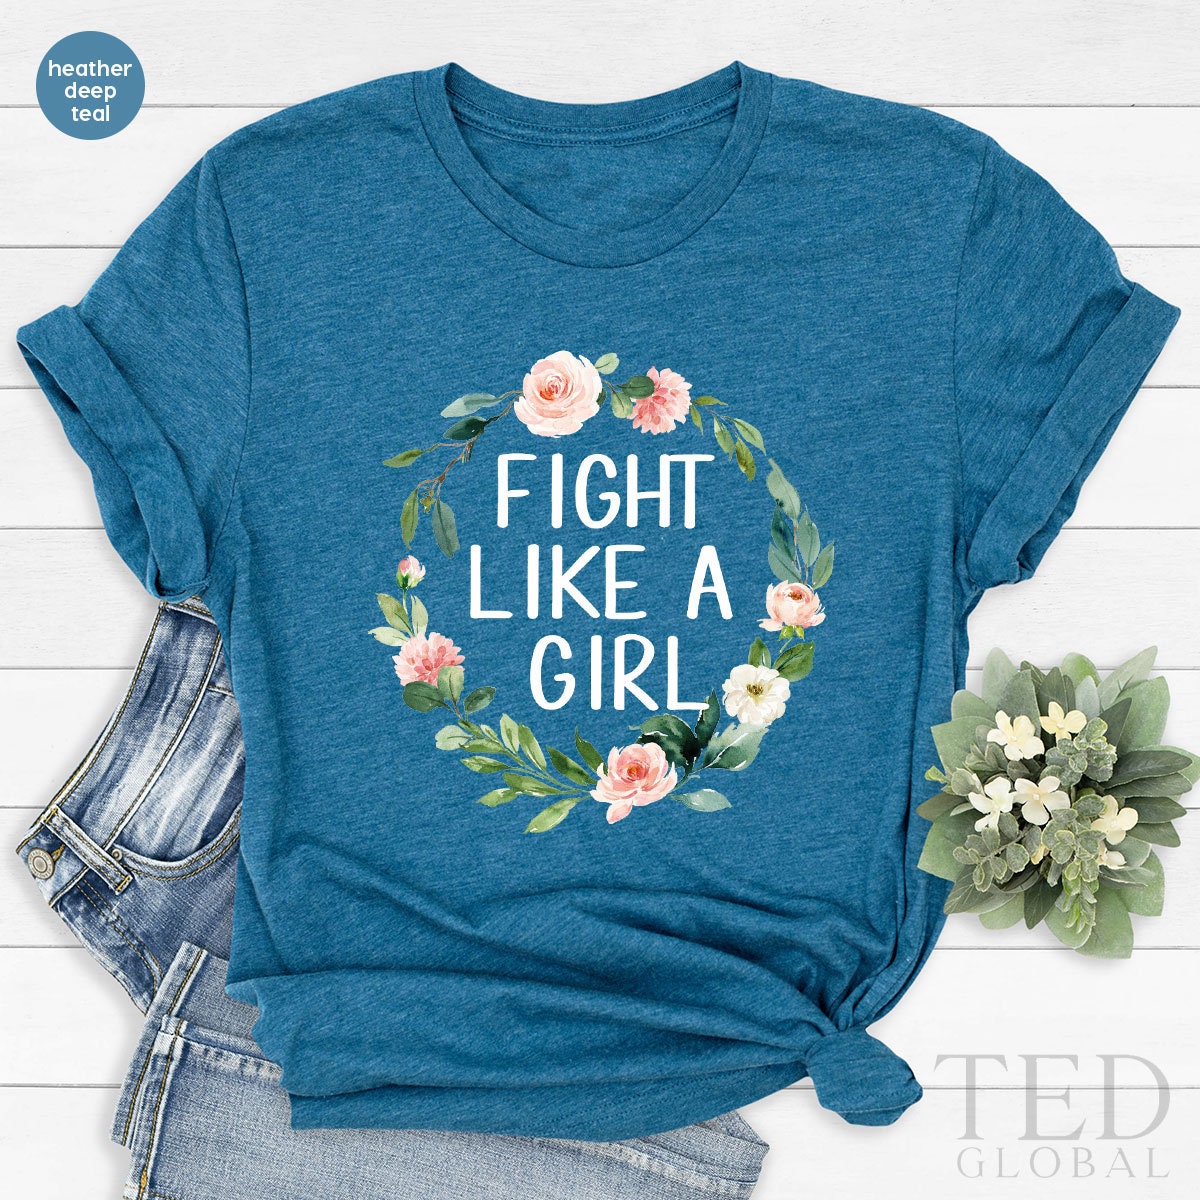 Cancer Shirt, Cancer Awareness T Shirt, Fight Like A Girl T Shirt, Motivational Shirt, Floral Tee, Cancer T-Shirt, Cancer Gift - Fastdeliverytees.com